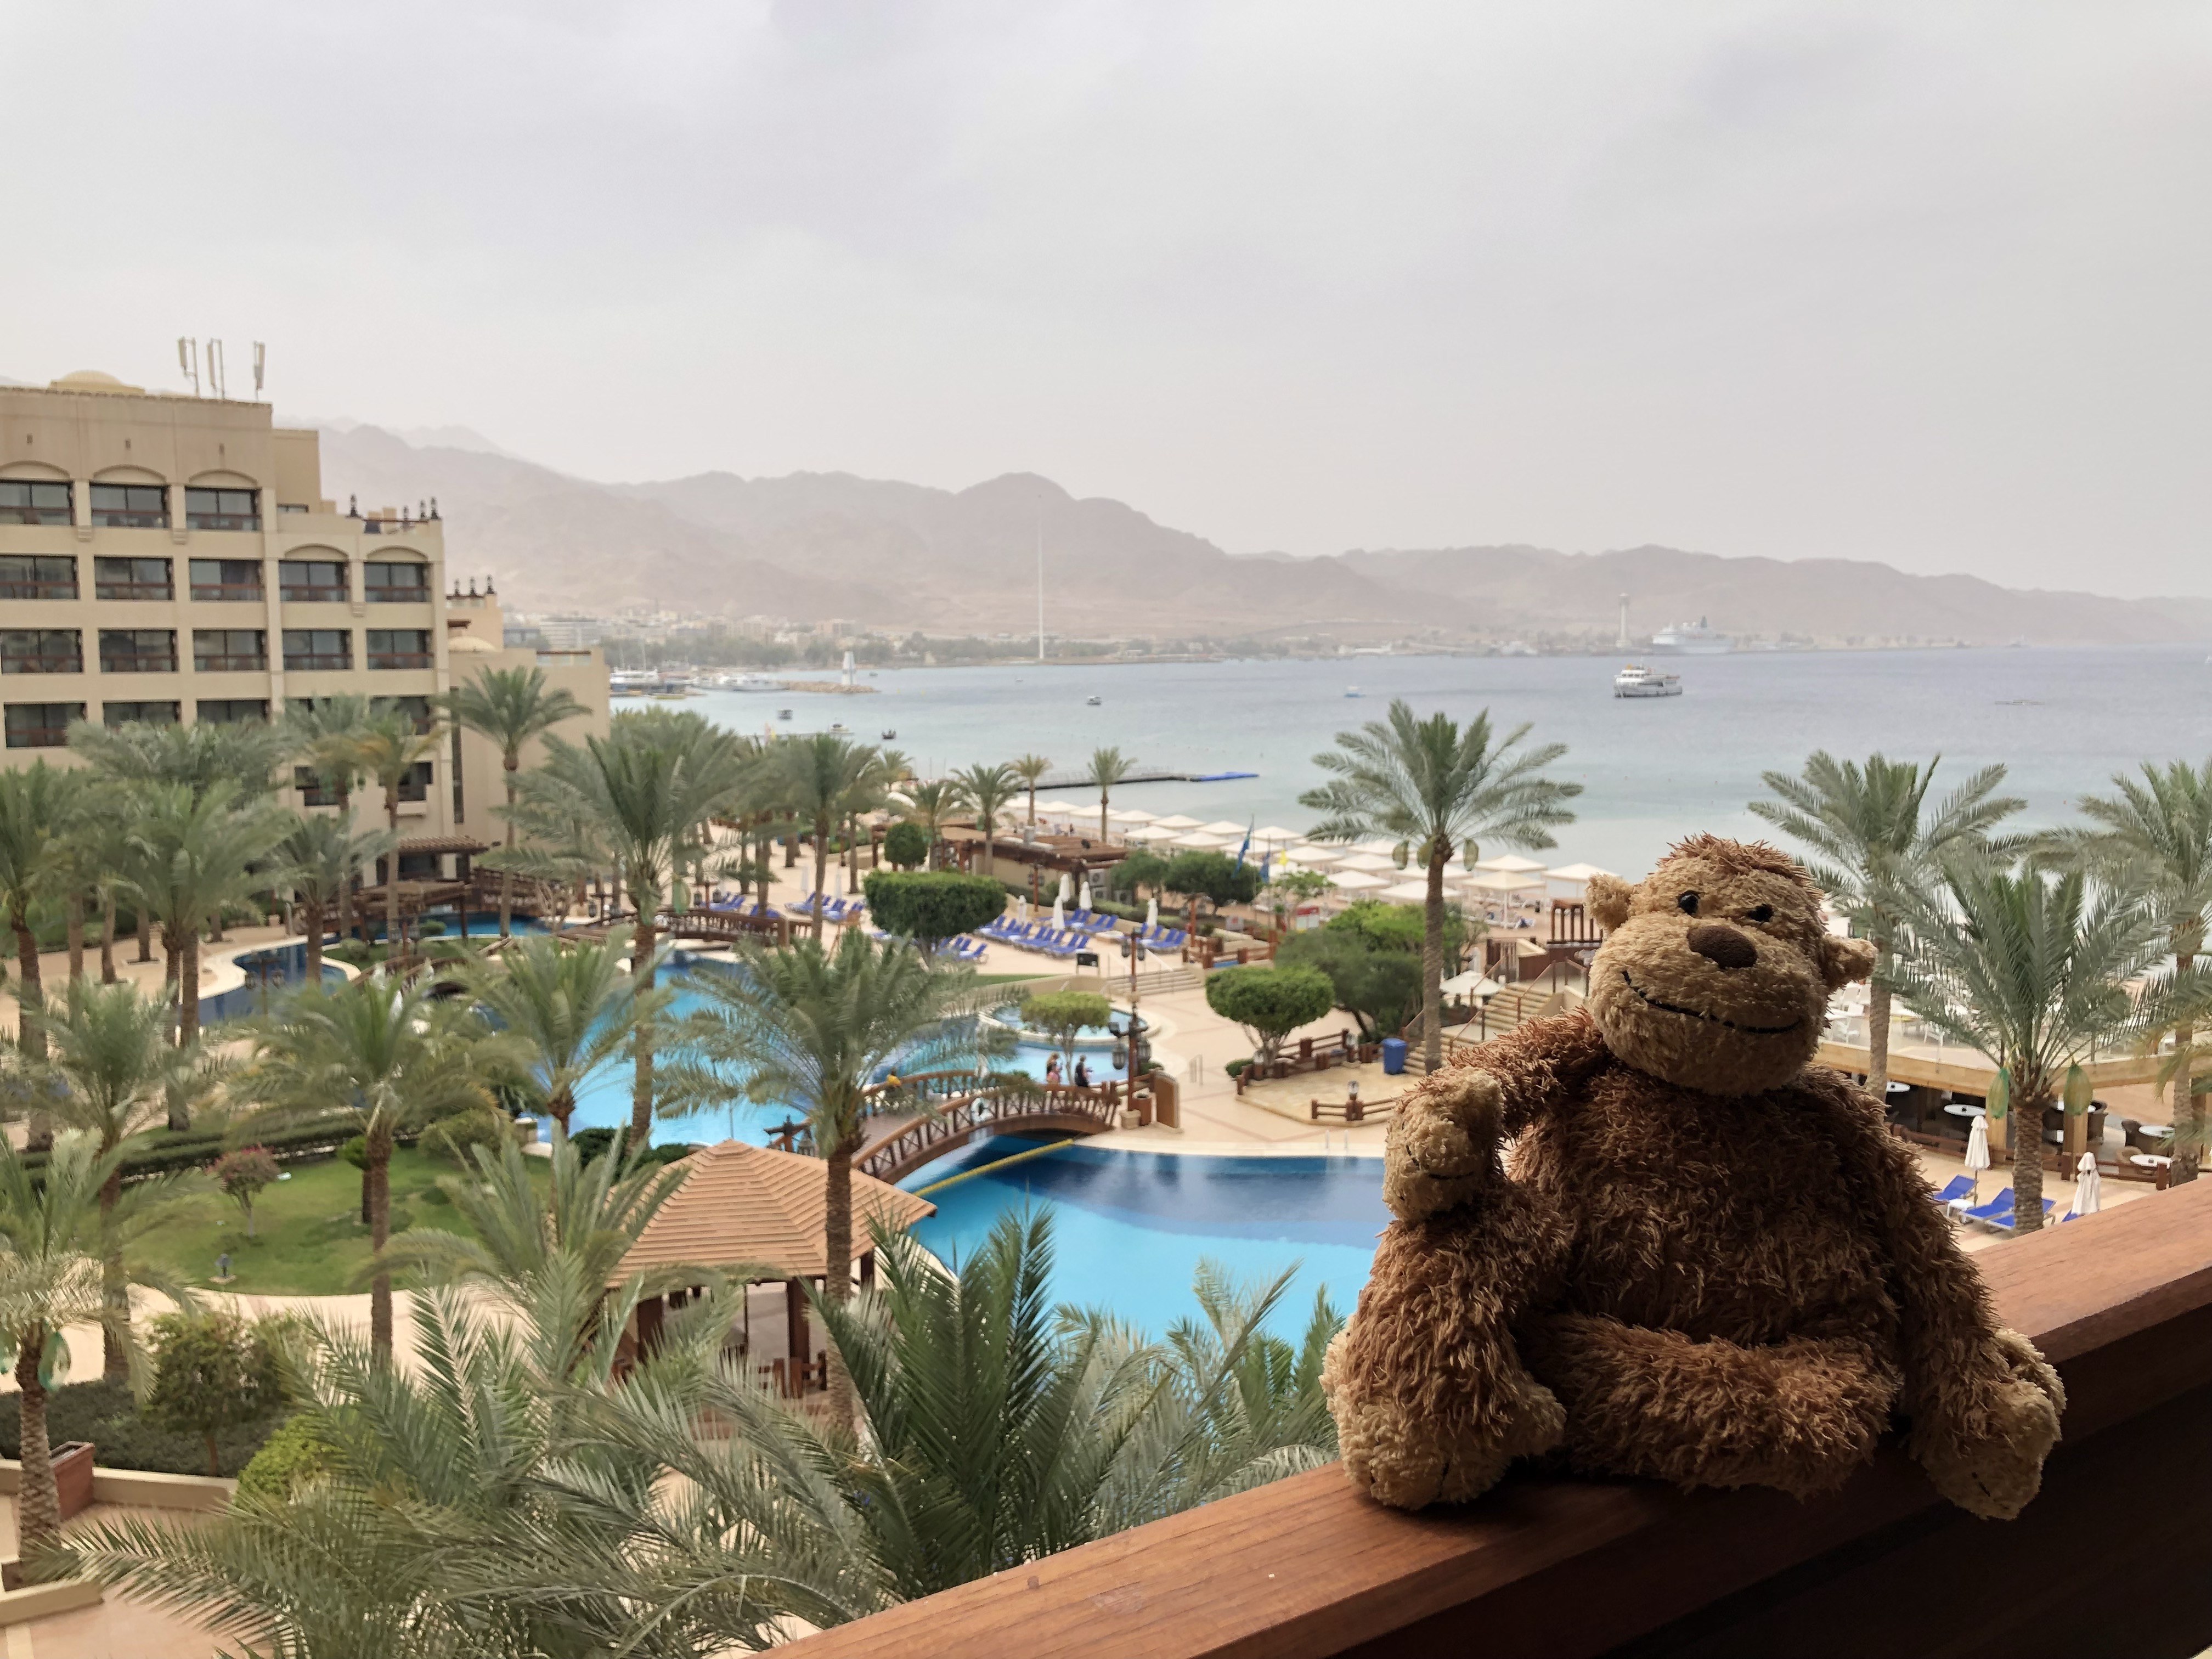 a teddy bear sitting on a railing overlooking a resort